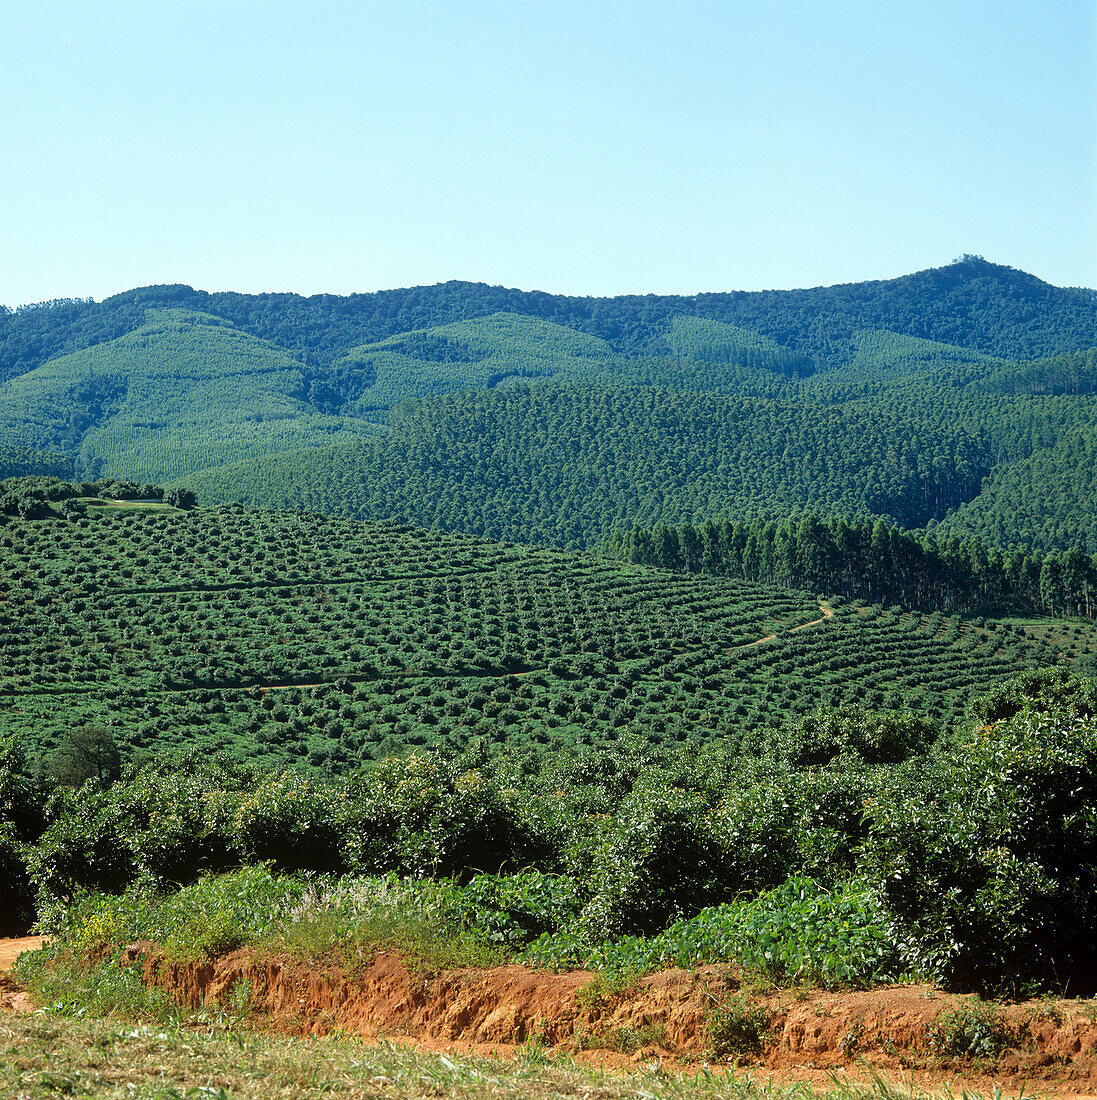 Avocado orchard plantations